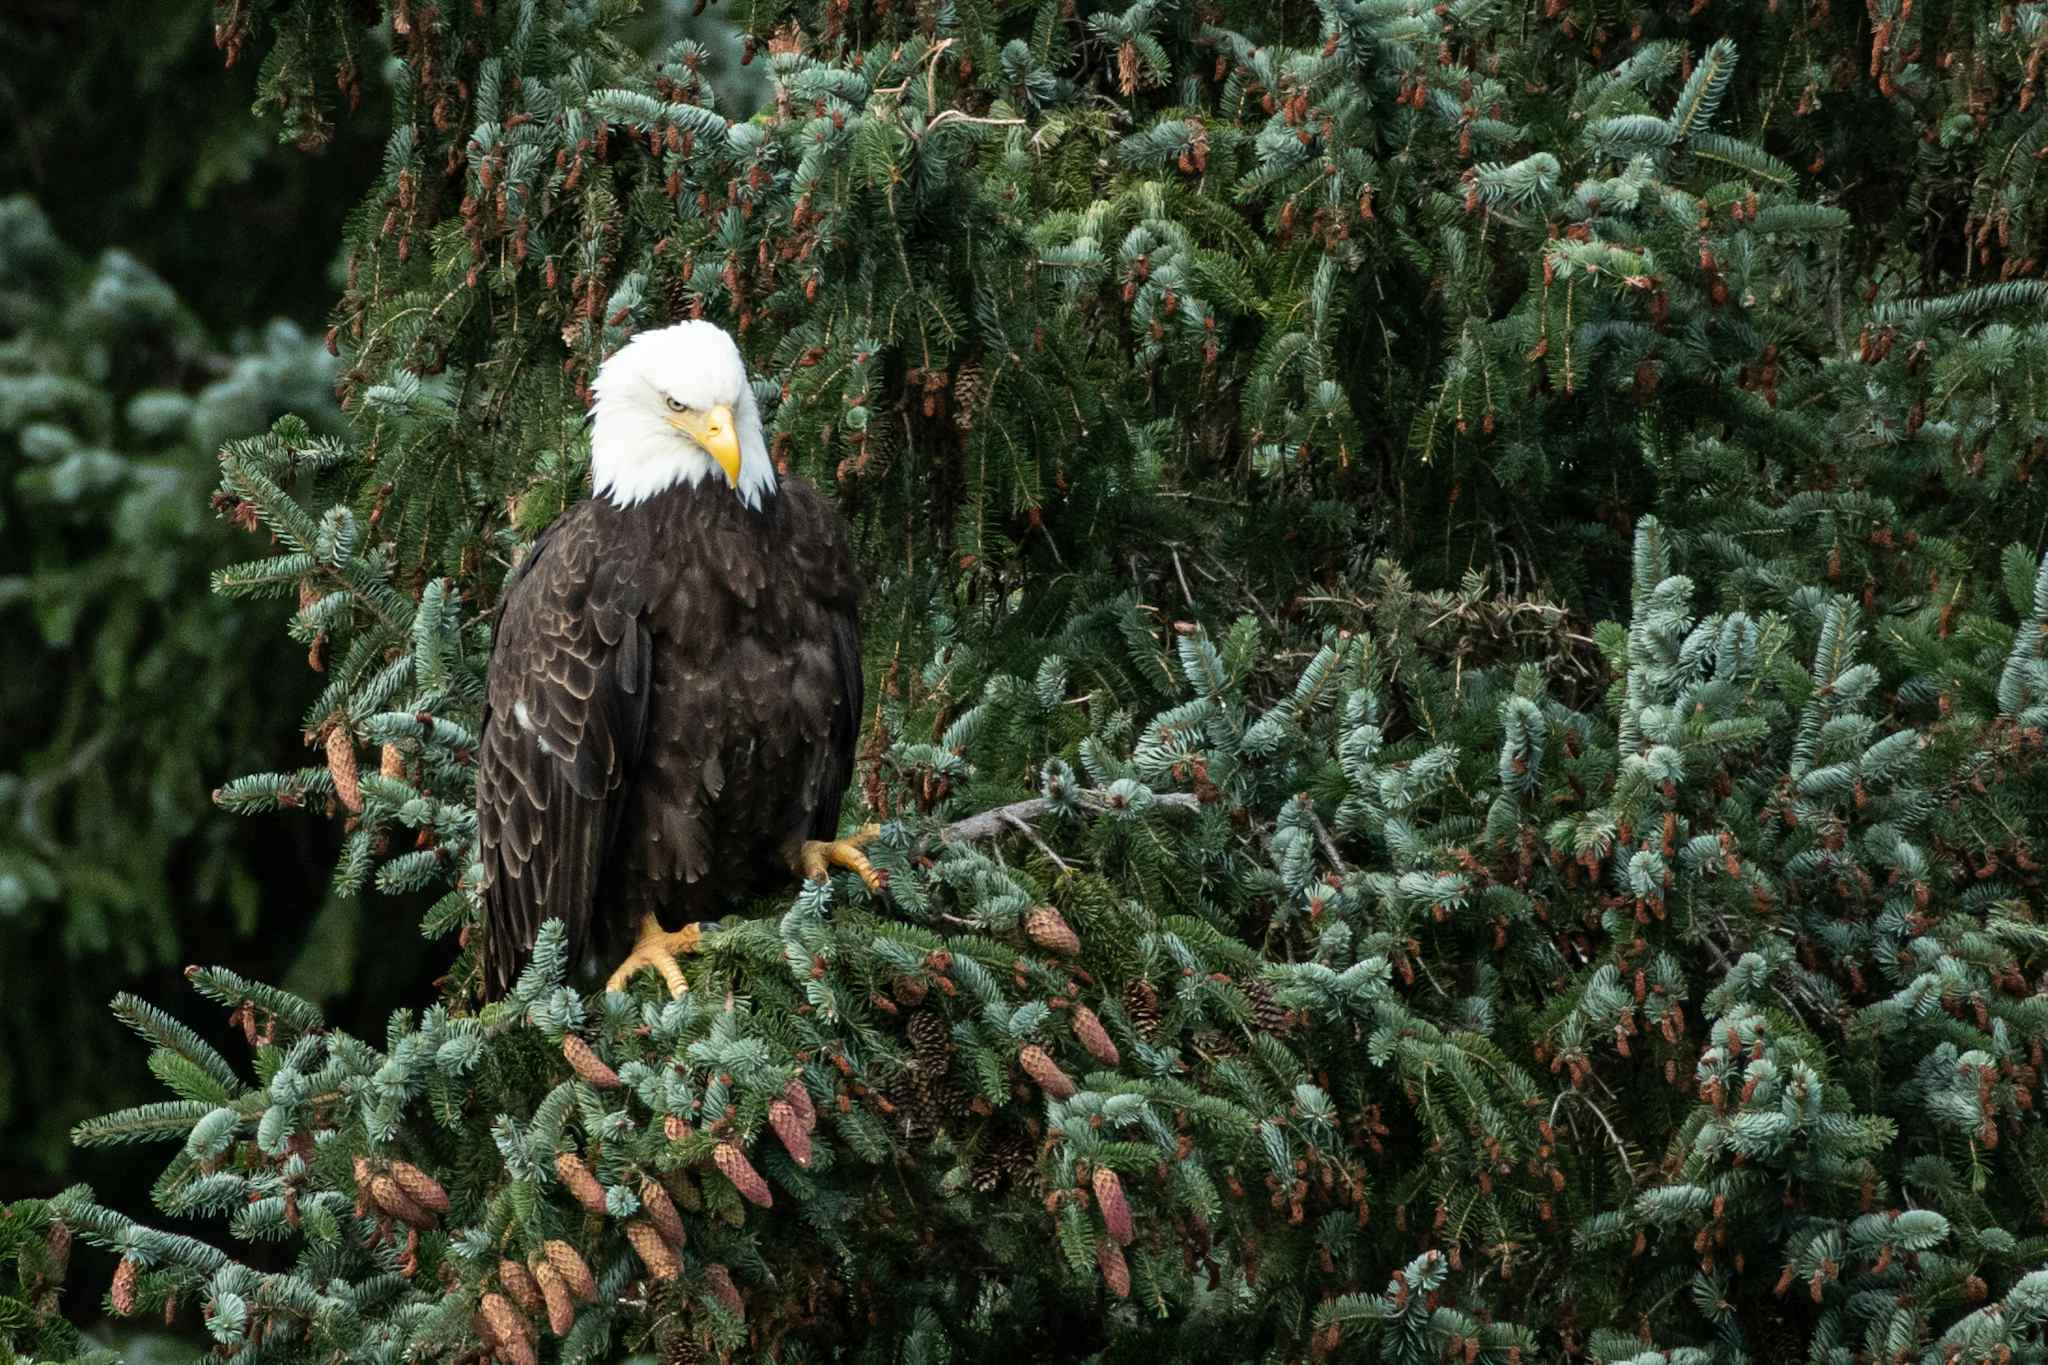 Golden Eagle, Yukon, Canada
Host Image: Ruby Range Adventures